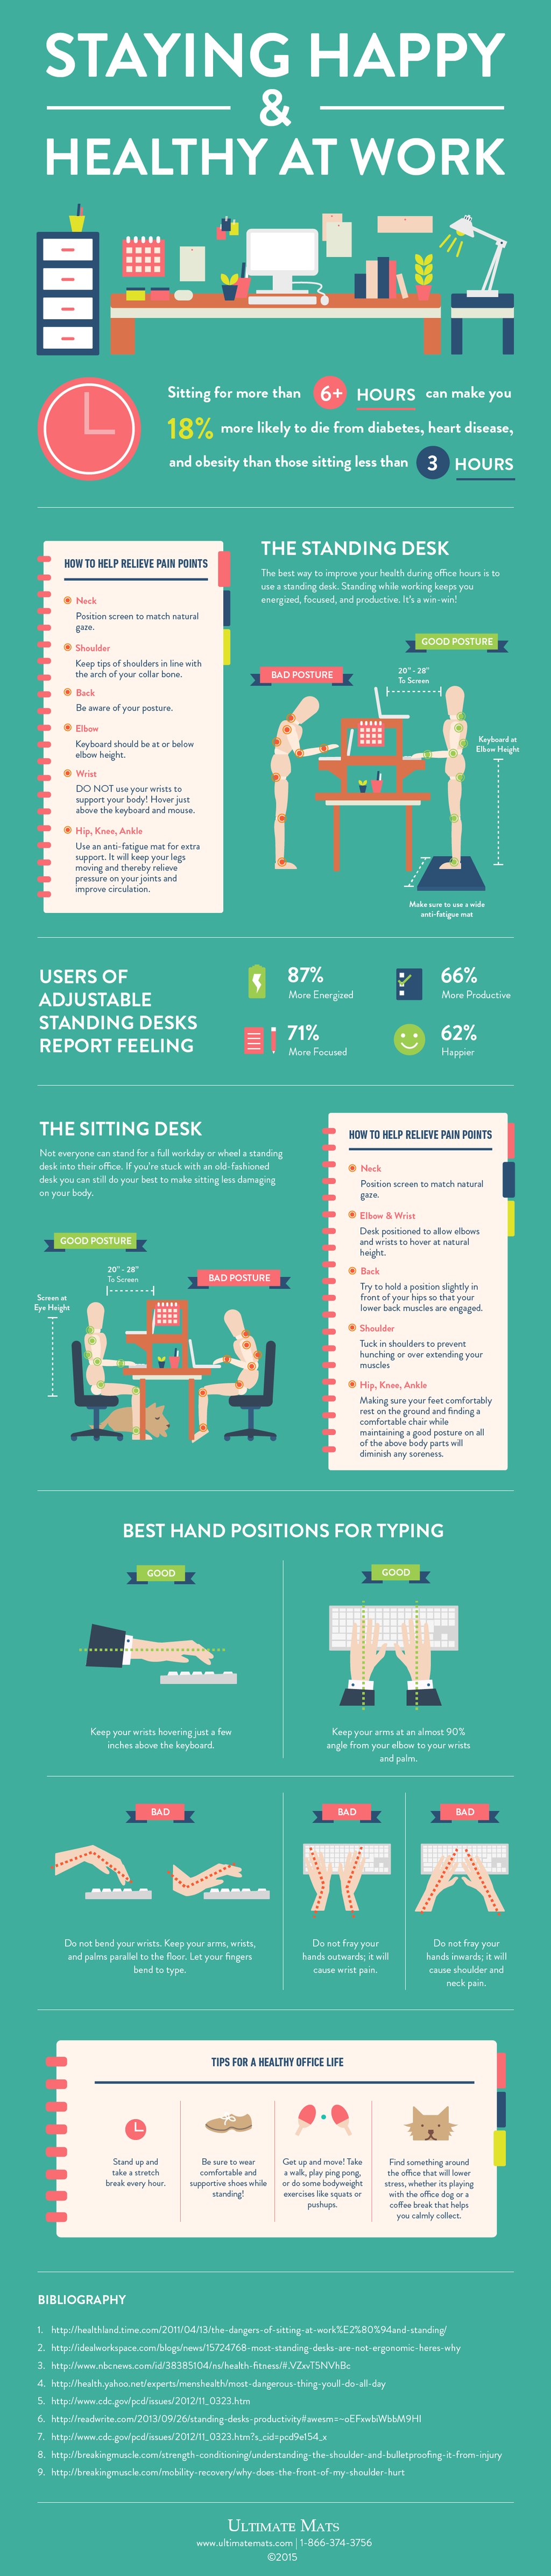 standing-desk-ergonomics-infographic.png